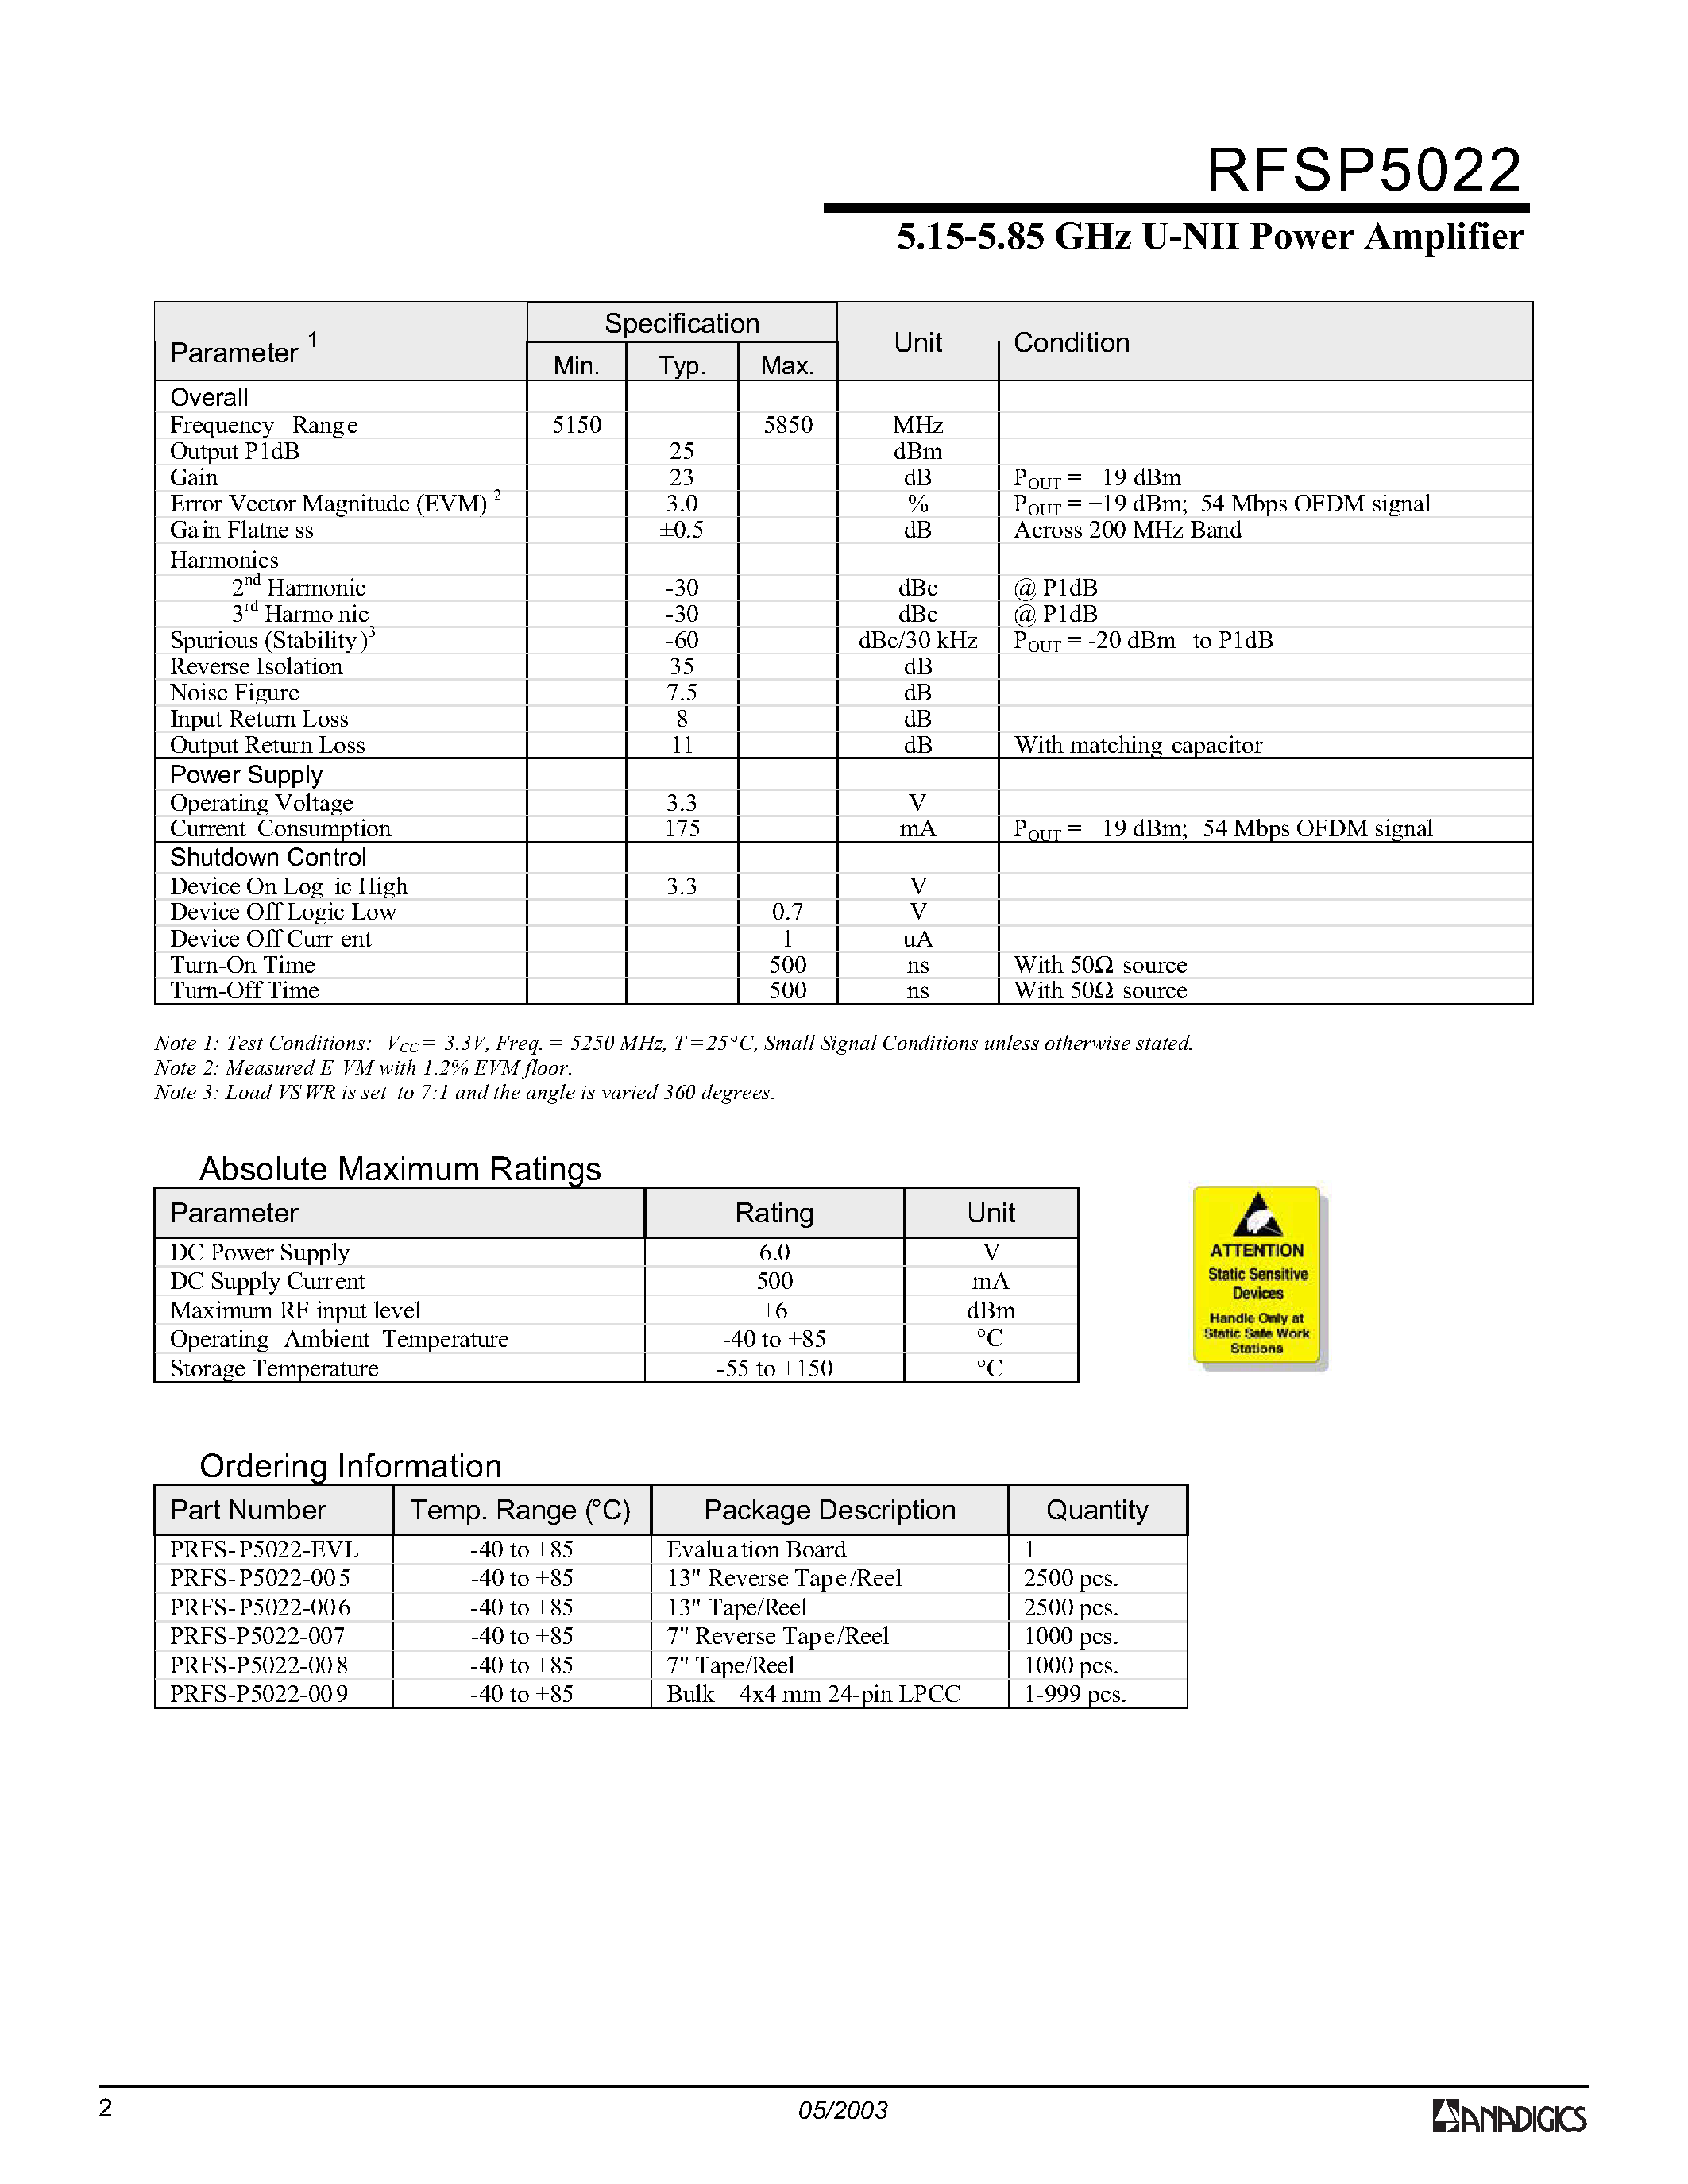 Datasheet RFSP5022 - 5.15-5.85 GHz U-NII Power Amplifier page 2